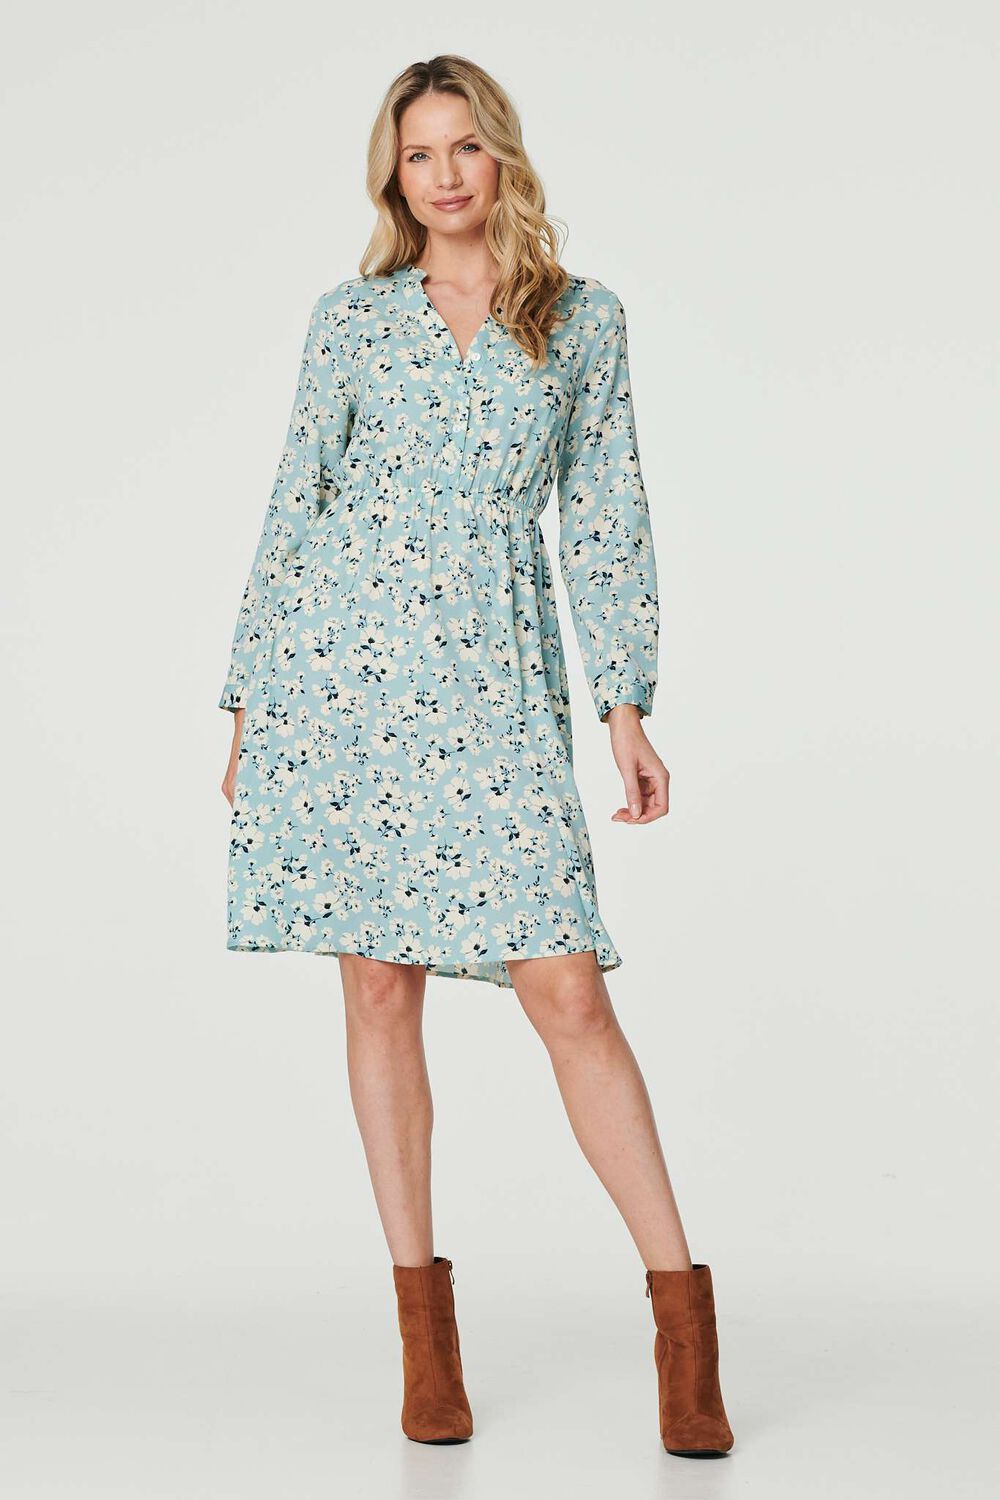 Izabel London Green - Ditsy Floral Knee Length Dress, Size: 18